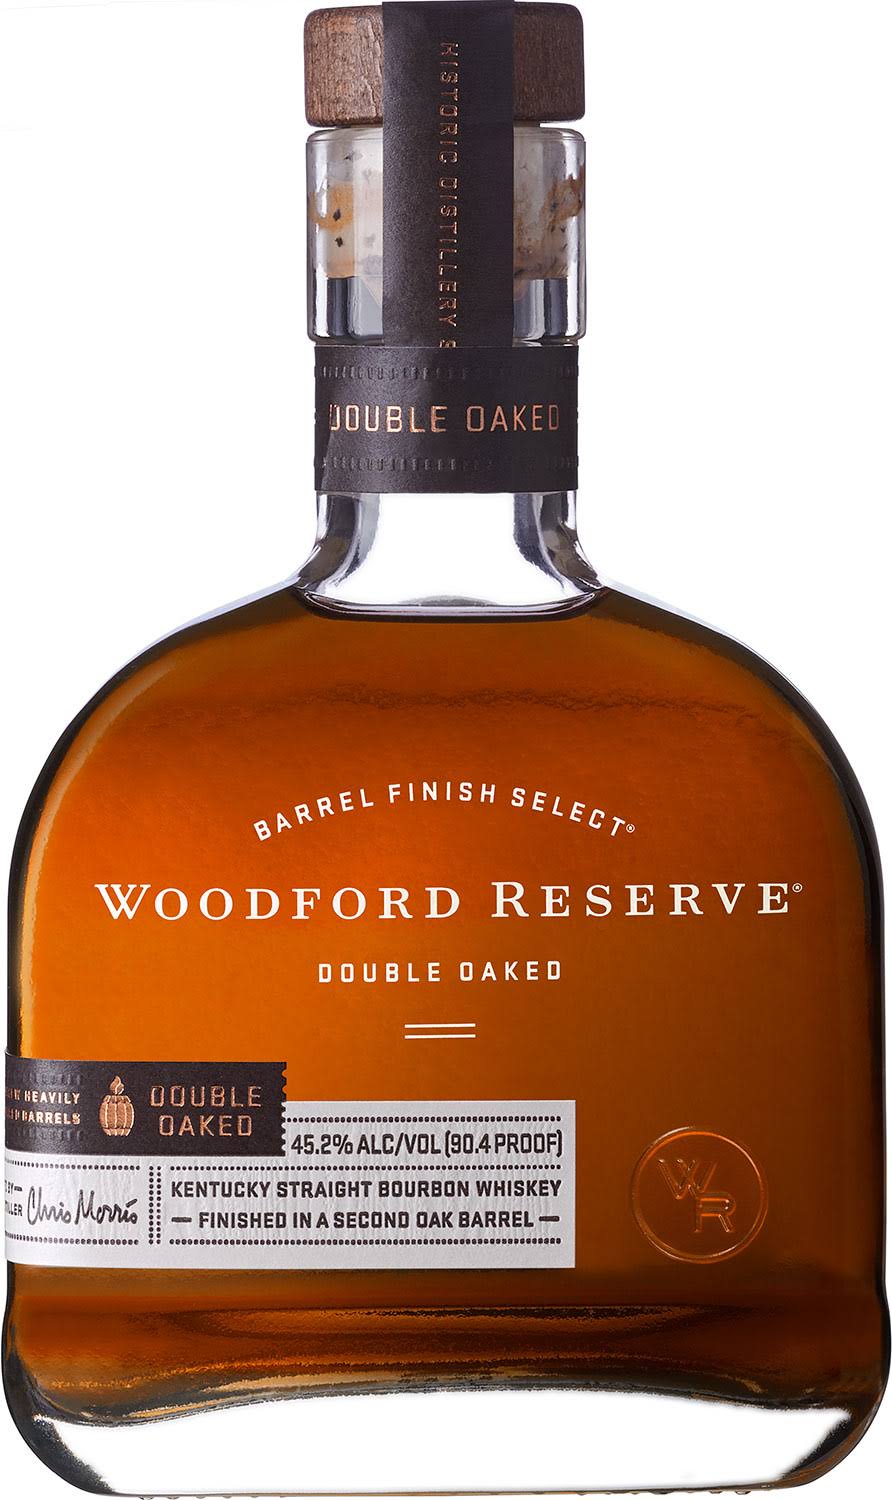 Woodford Reserve Double Oaked Bourbon, Kentucky Straight Bourbon Whiskey - 375 ml